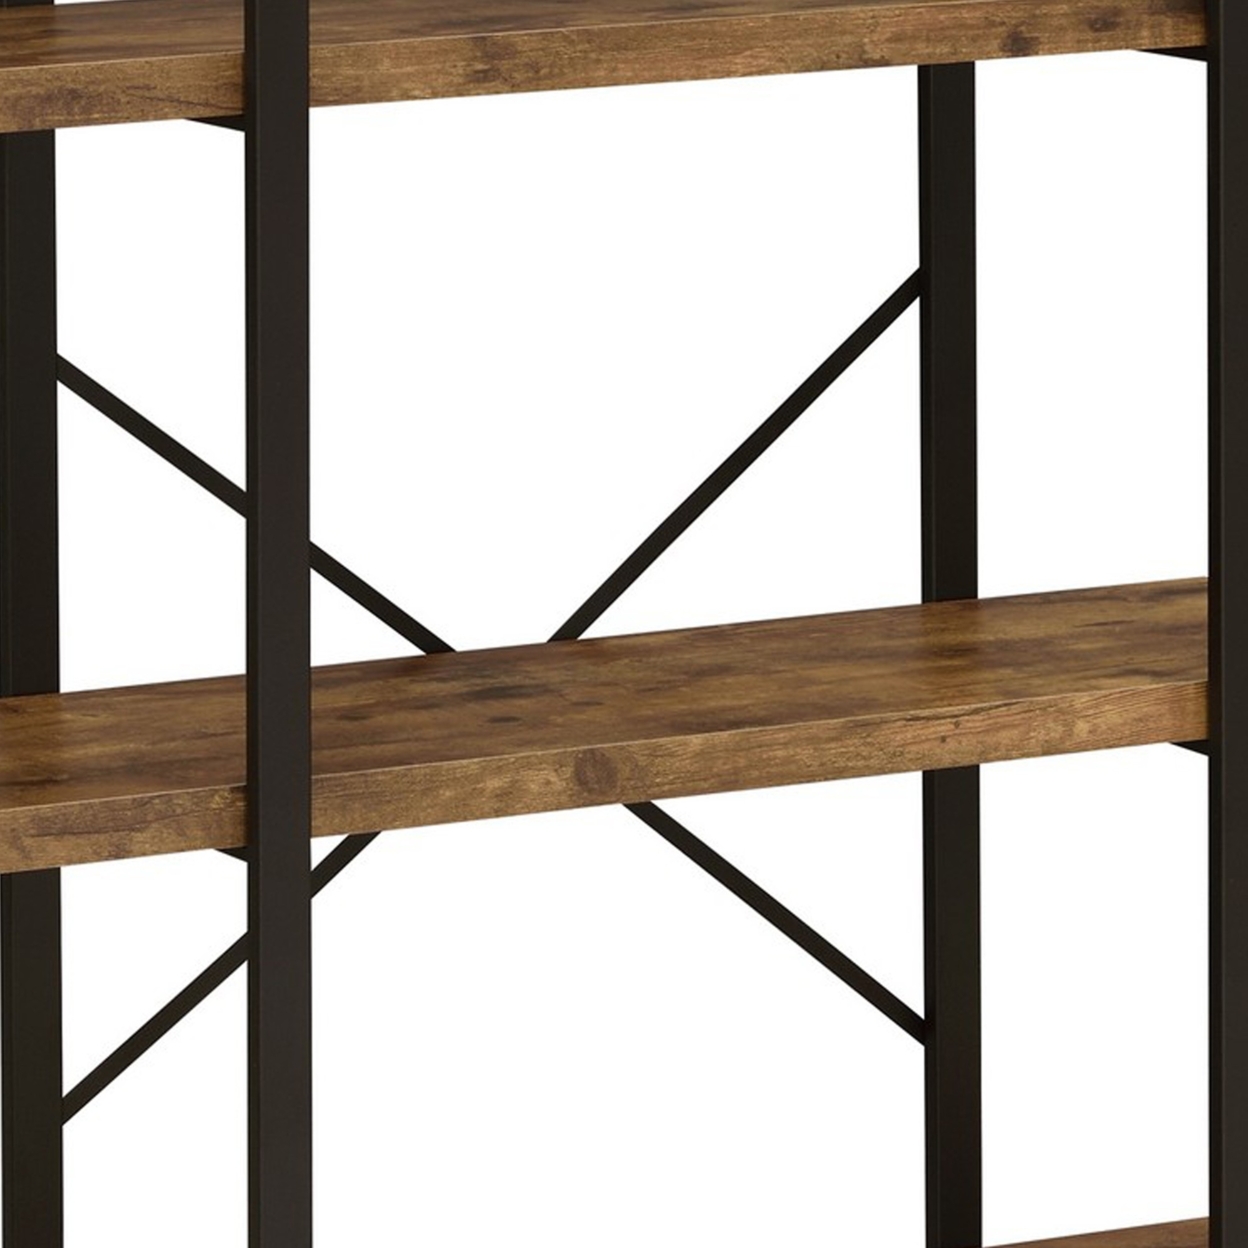 Ana 40 Inch Wood Bookcase, 3 Shelves, Crossed Metal Design, Rustic Brown